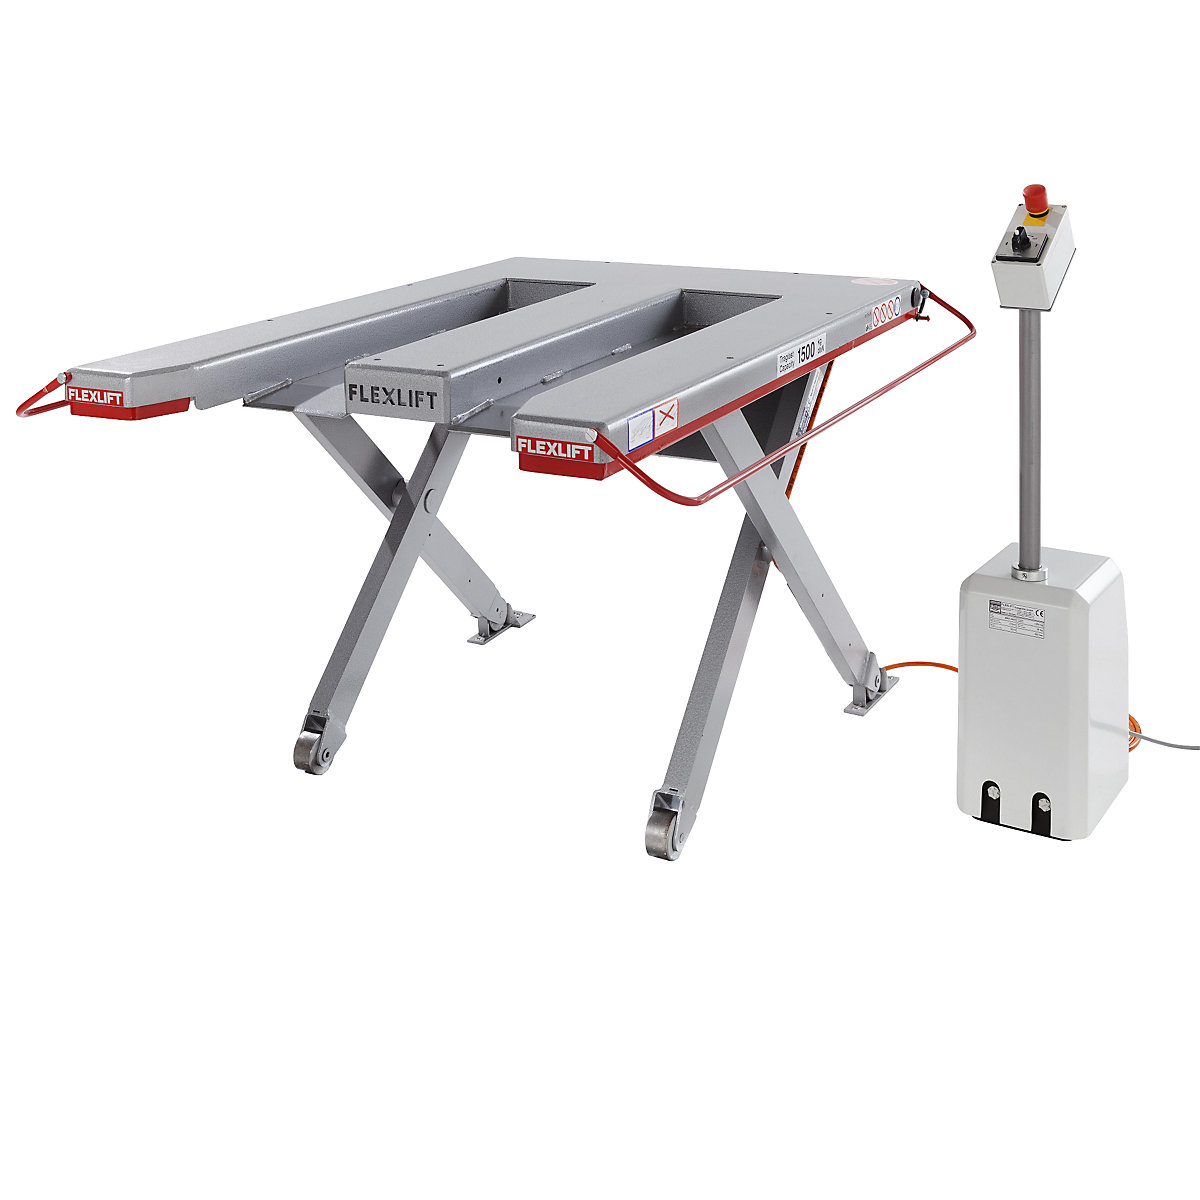 Low profile lift table, E series - Flexlift